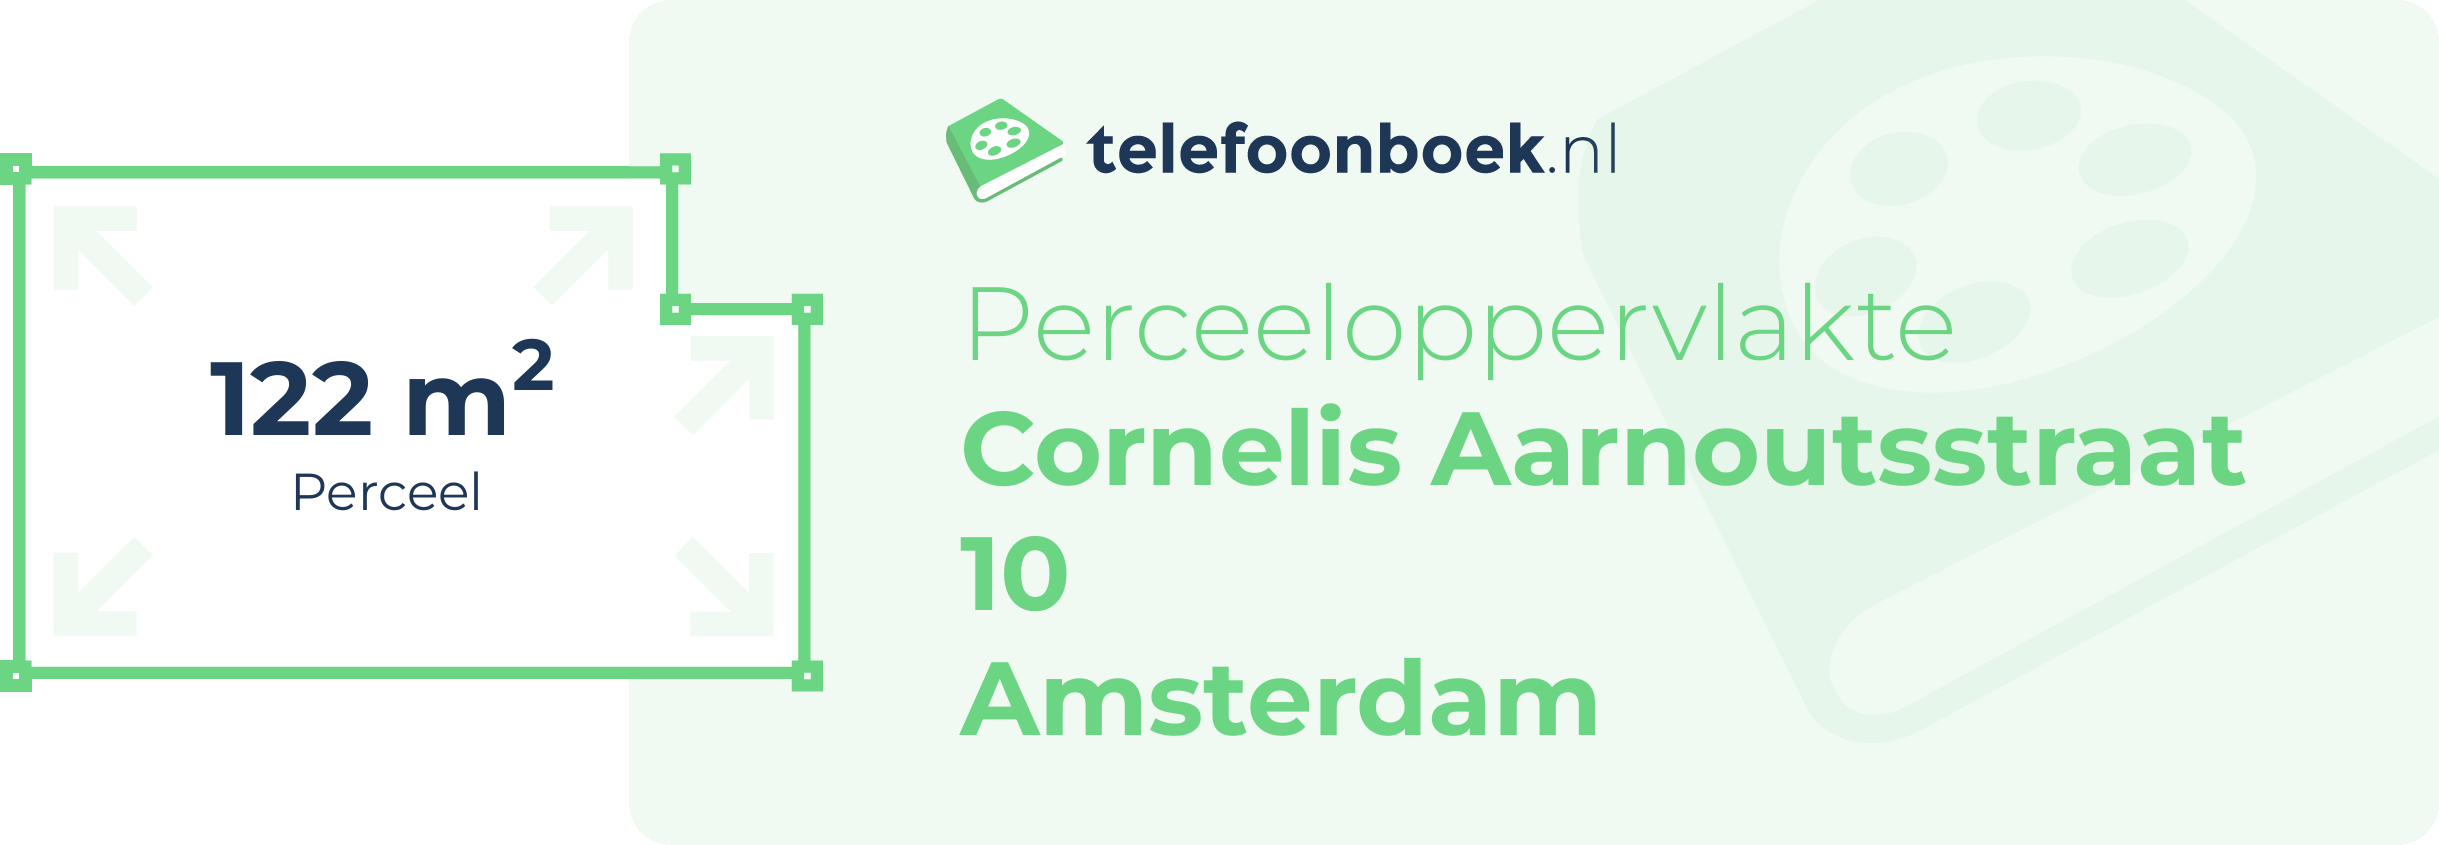 Perceeloppervlakte Cornelis Aarnoutsstraat 10 Amsterdam